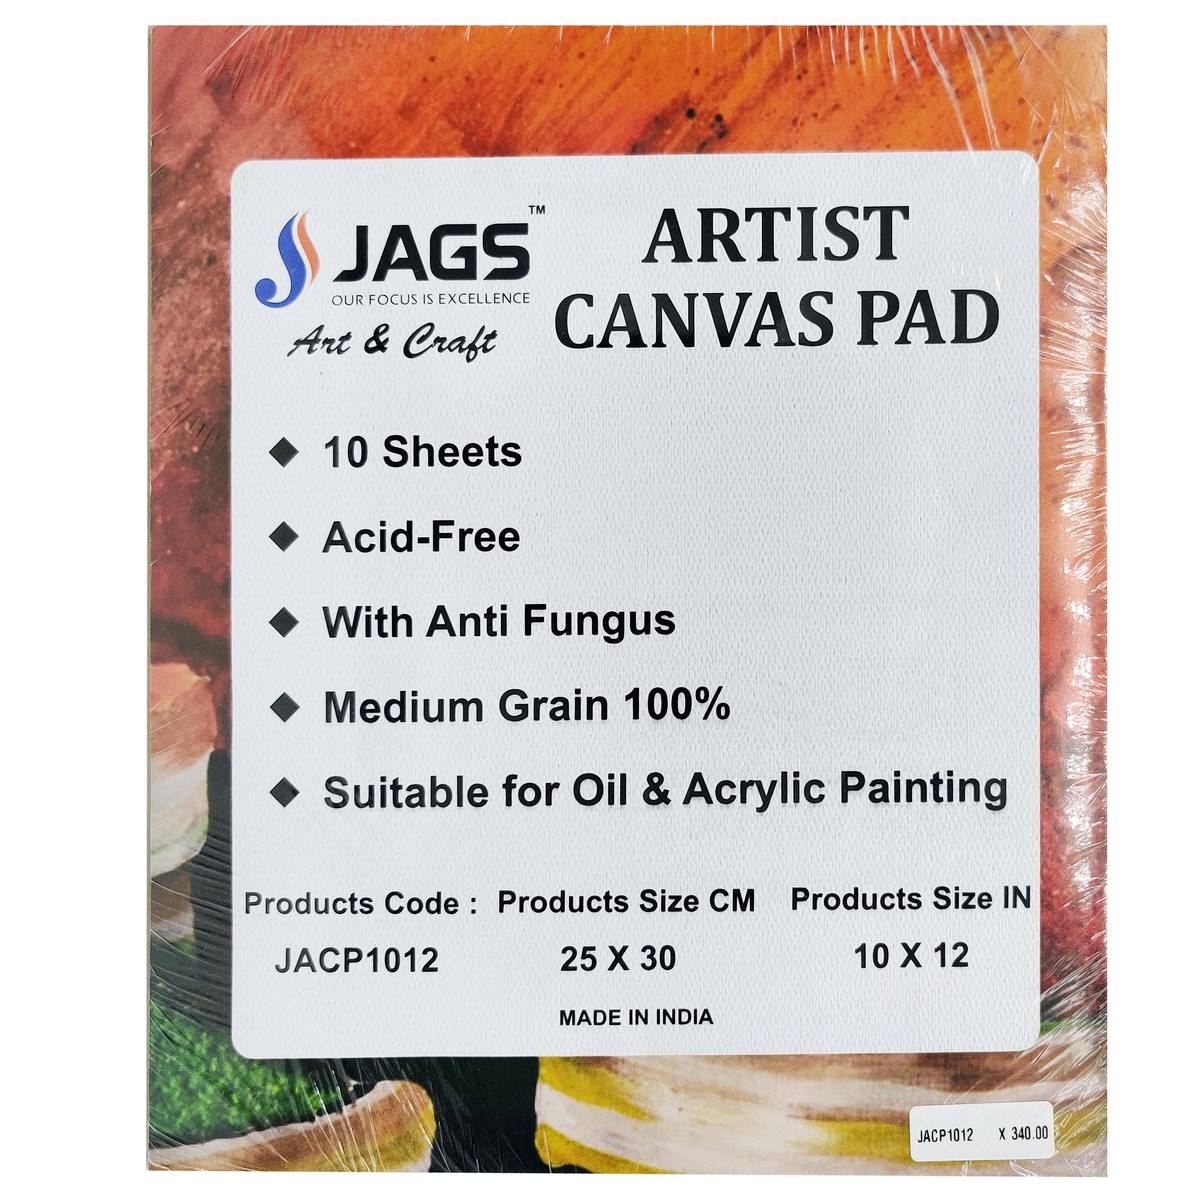 jags-mumbai Canvas Premium Artist Canvas Pad - 10X12 Inch